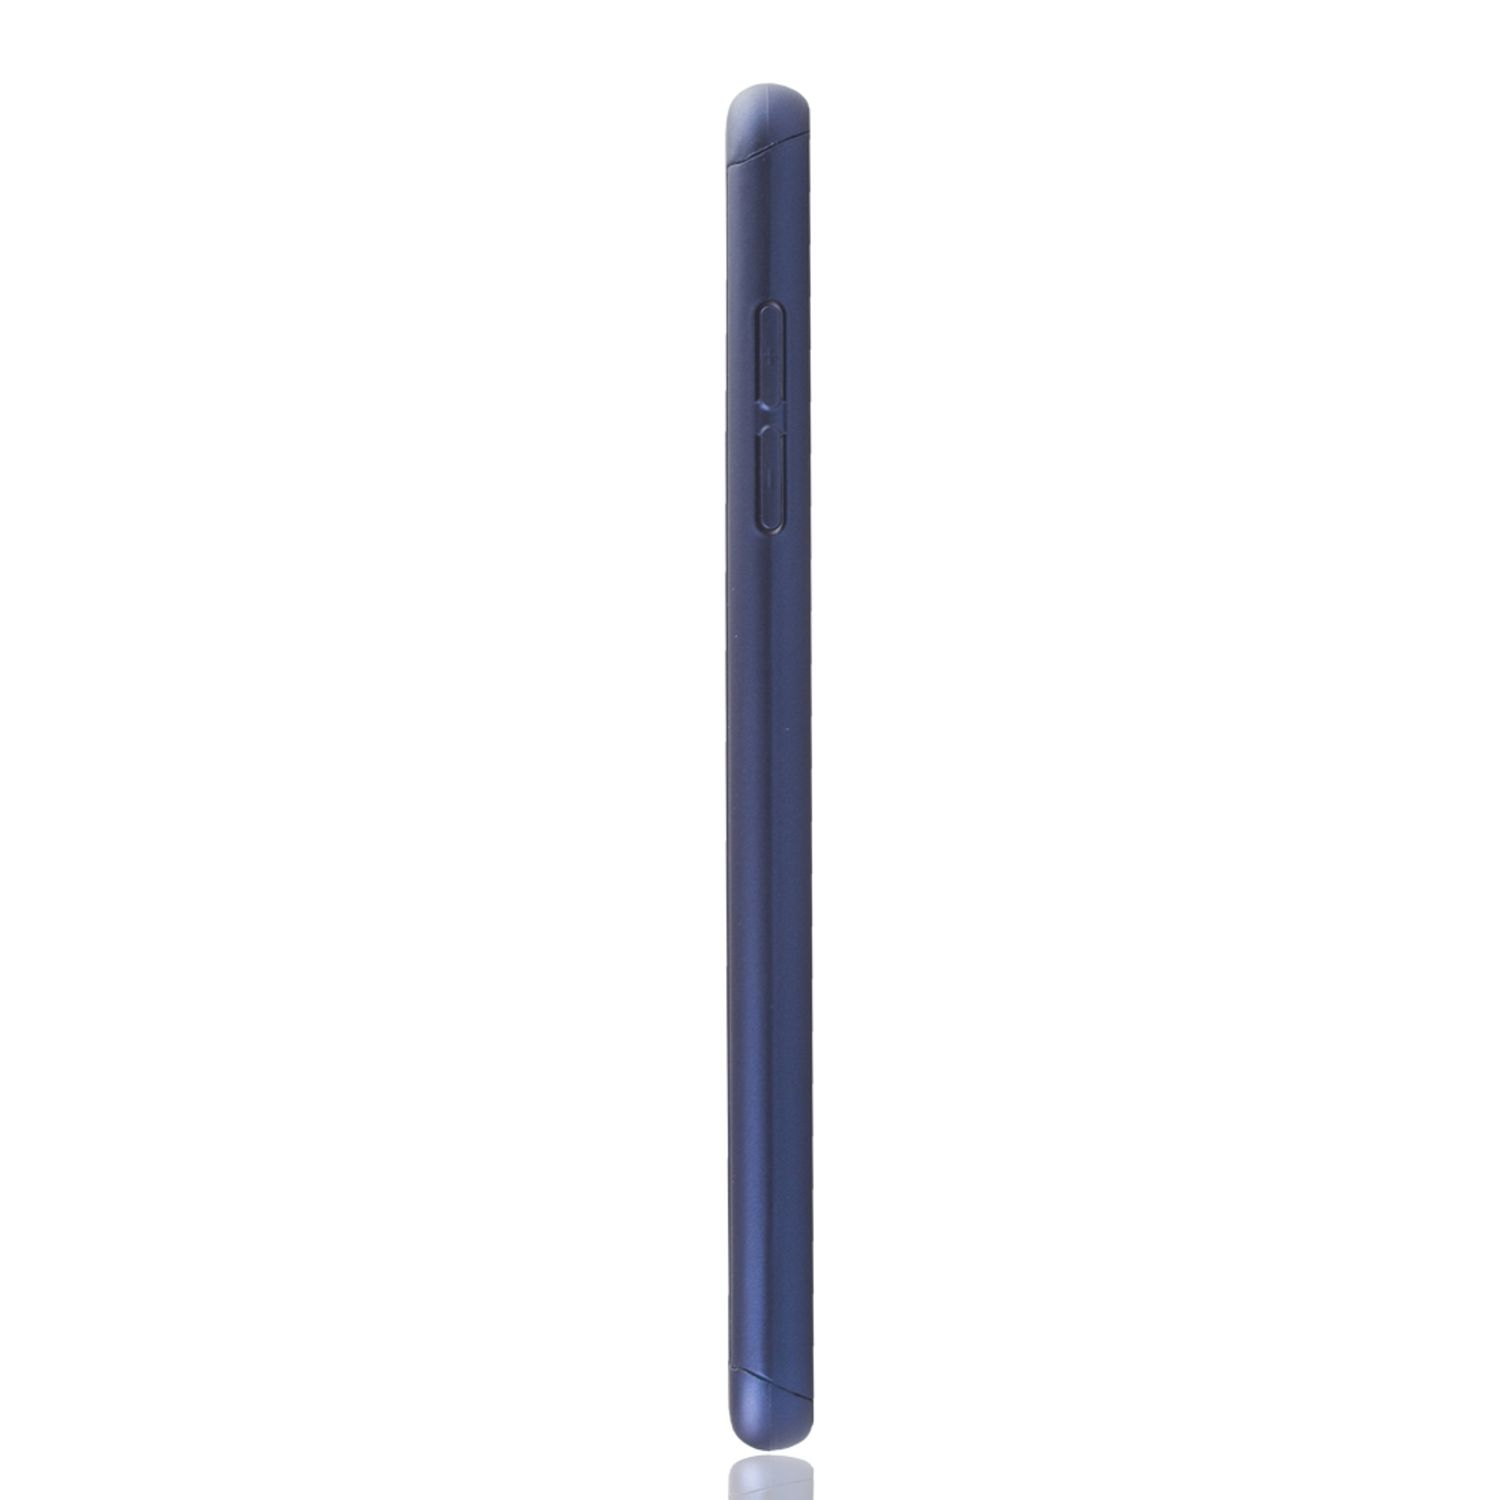 Galaxy DESIGN KÖNIG Cover, Samsung, Plus (2018), Full Blau A6 Schutzhülle,